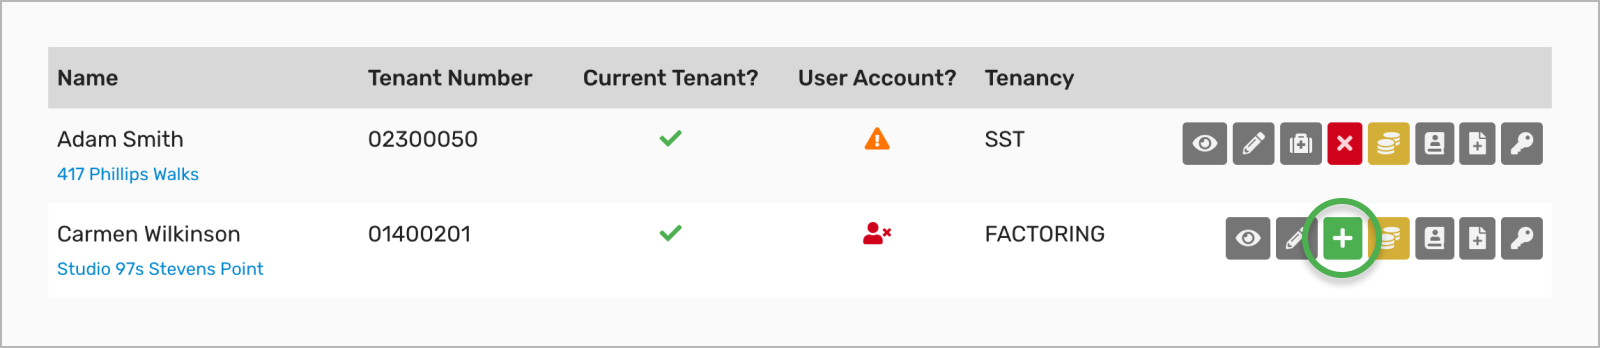 Add tenant account button